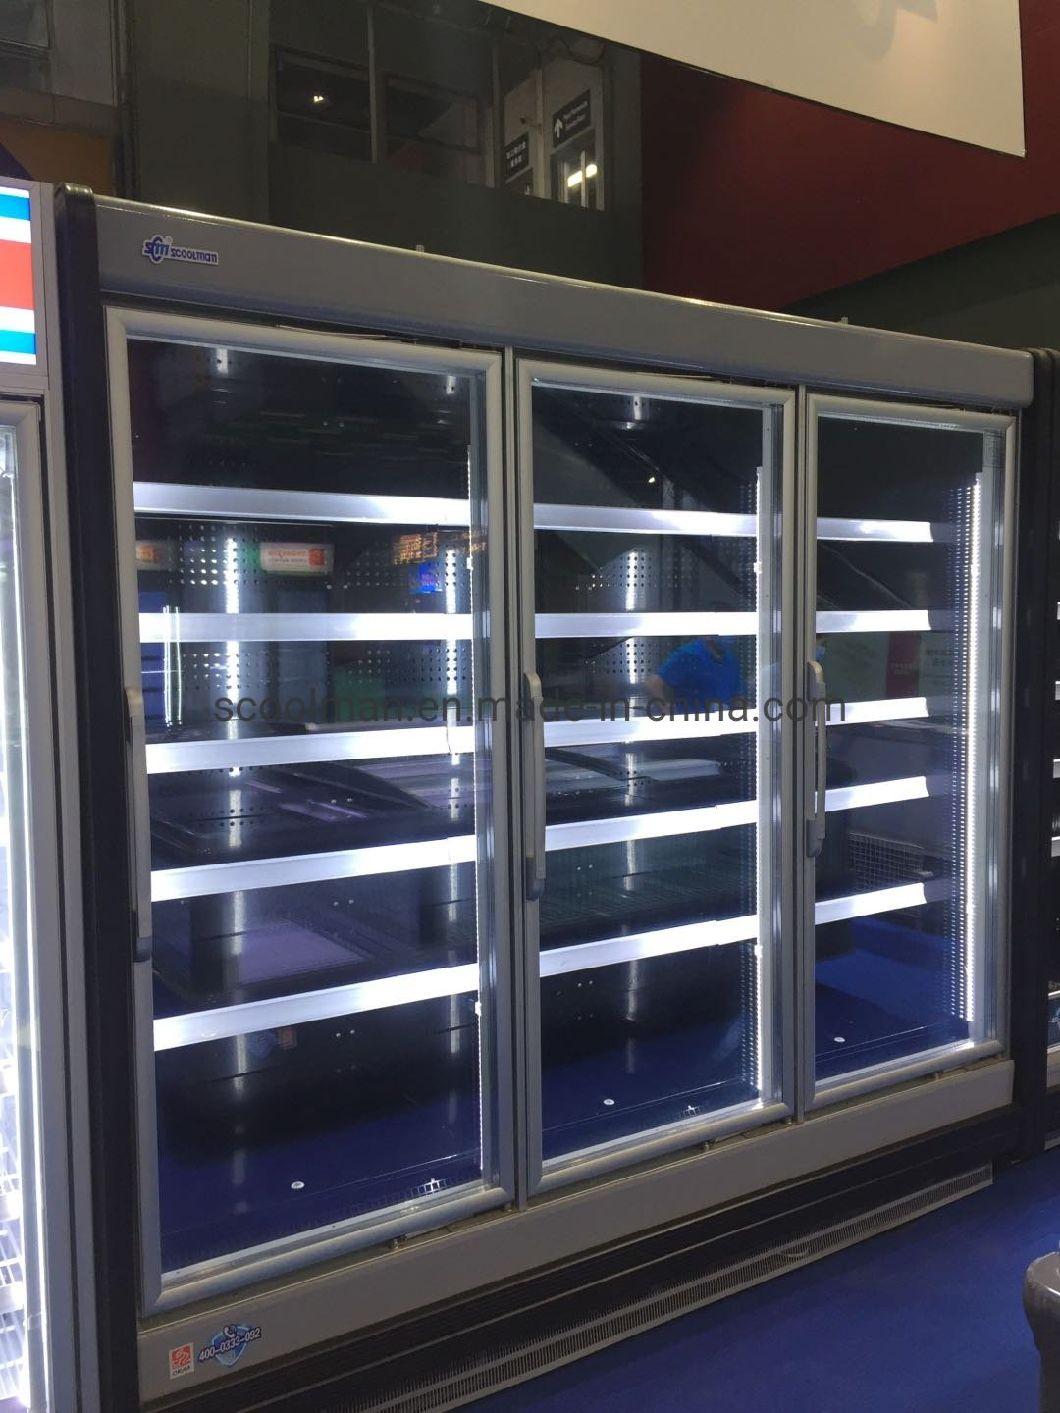 Commercial Supermarket Vertical Beverage Cooler Cold Drink Fridge Double Glass Door Showcase Display Refrigerator